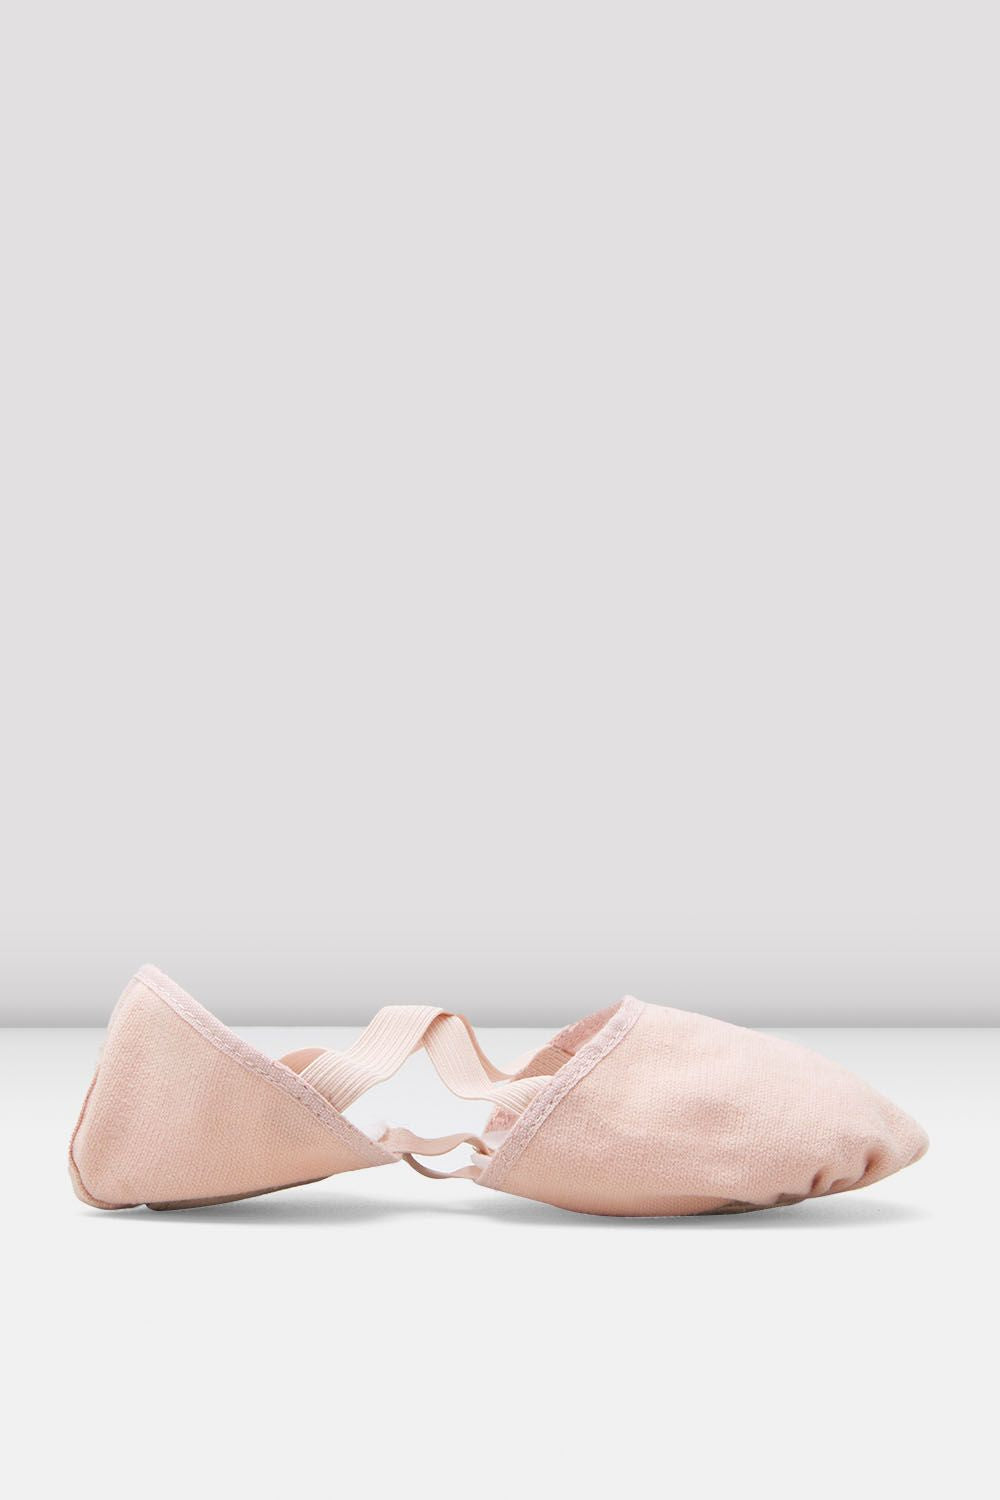 BLOCH Ladies Elastosplit Canvas Ballet Shoes, Pink Canvas